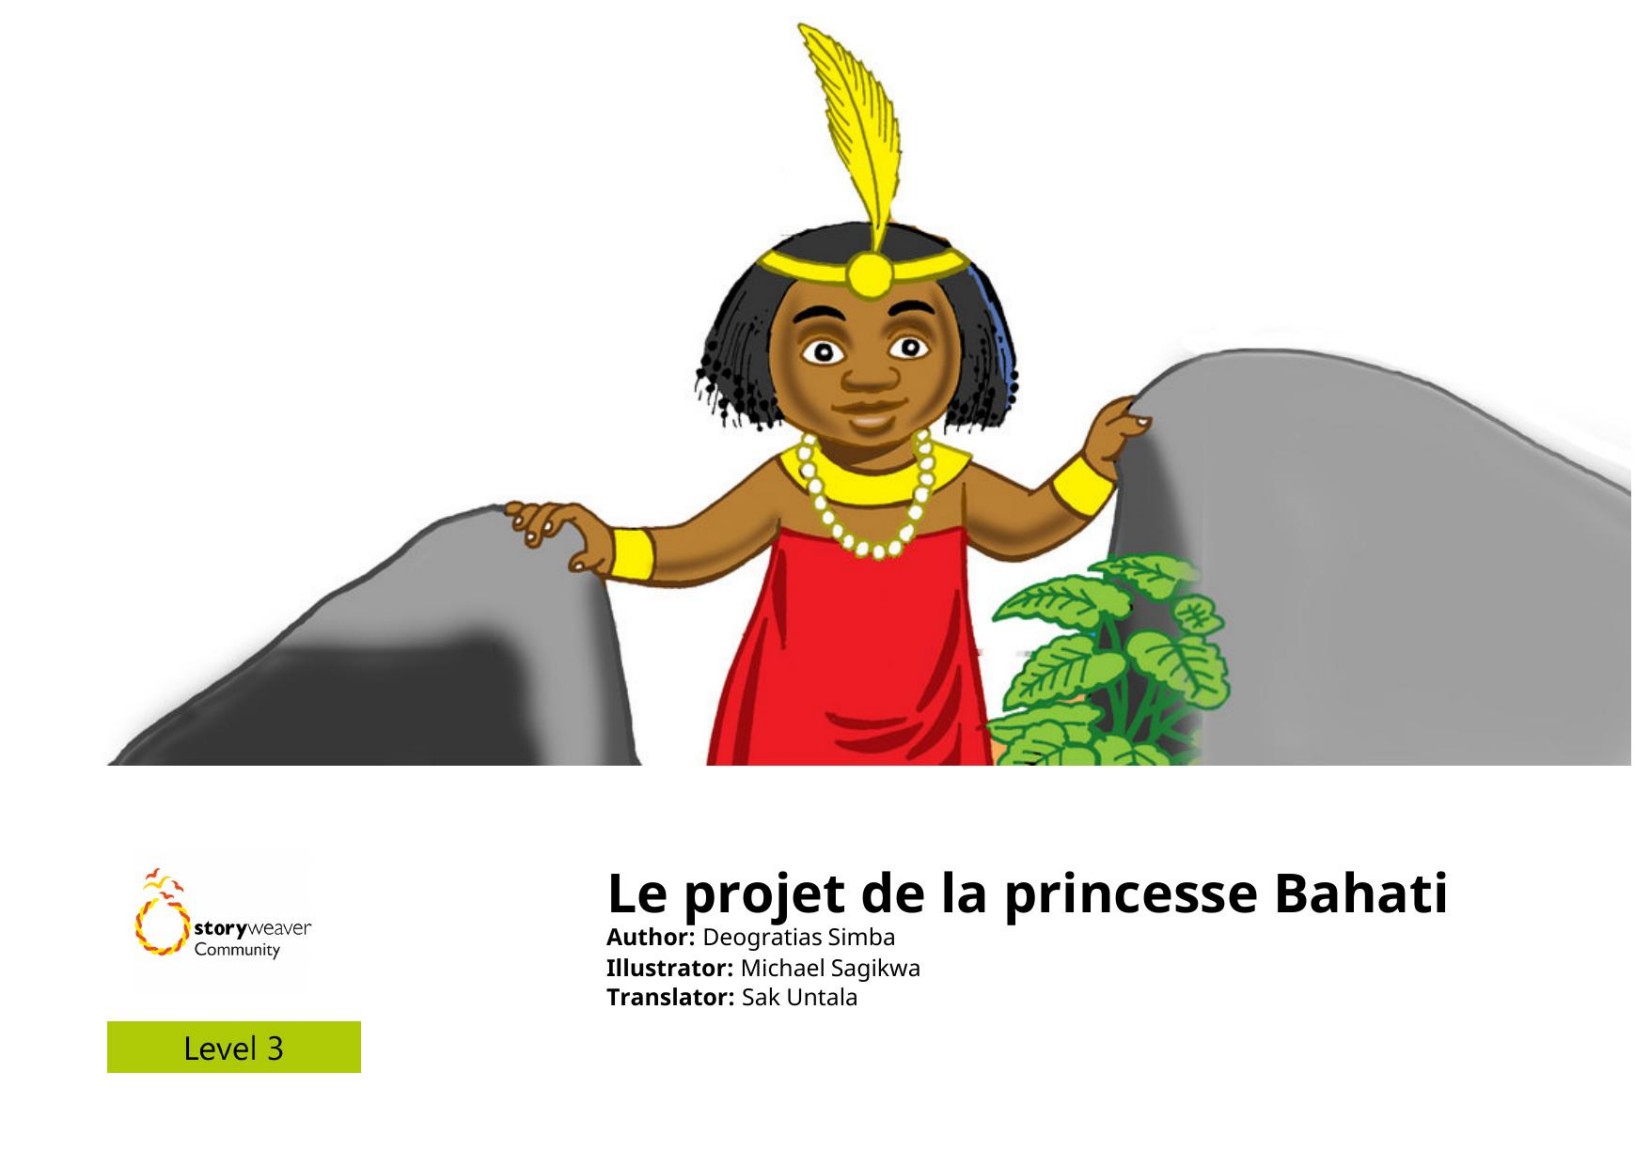 Le projet de la princesse Bahati